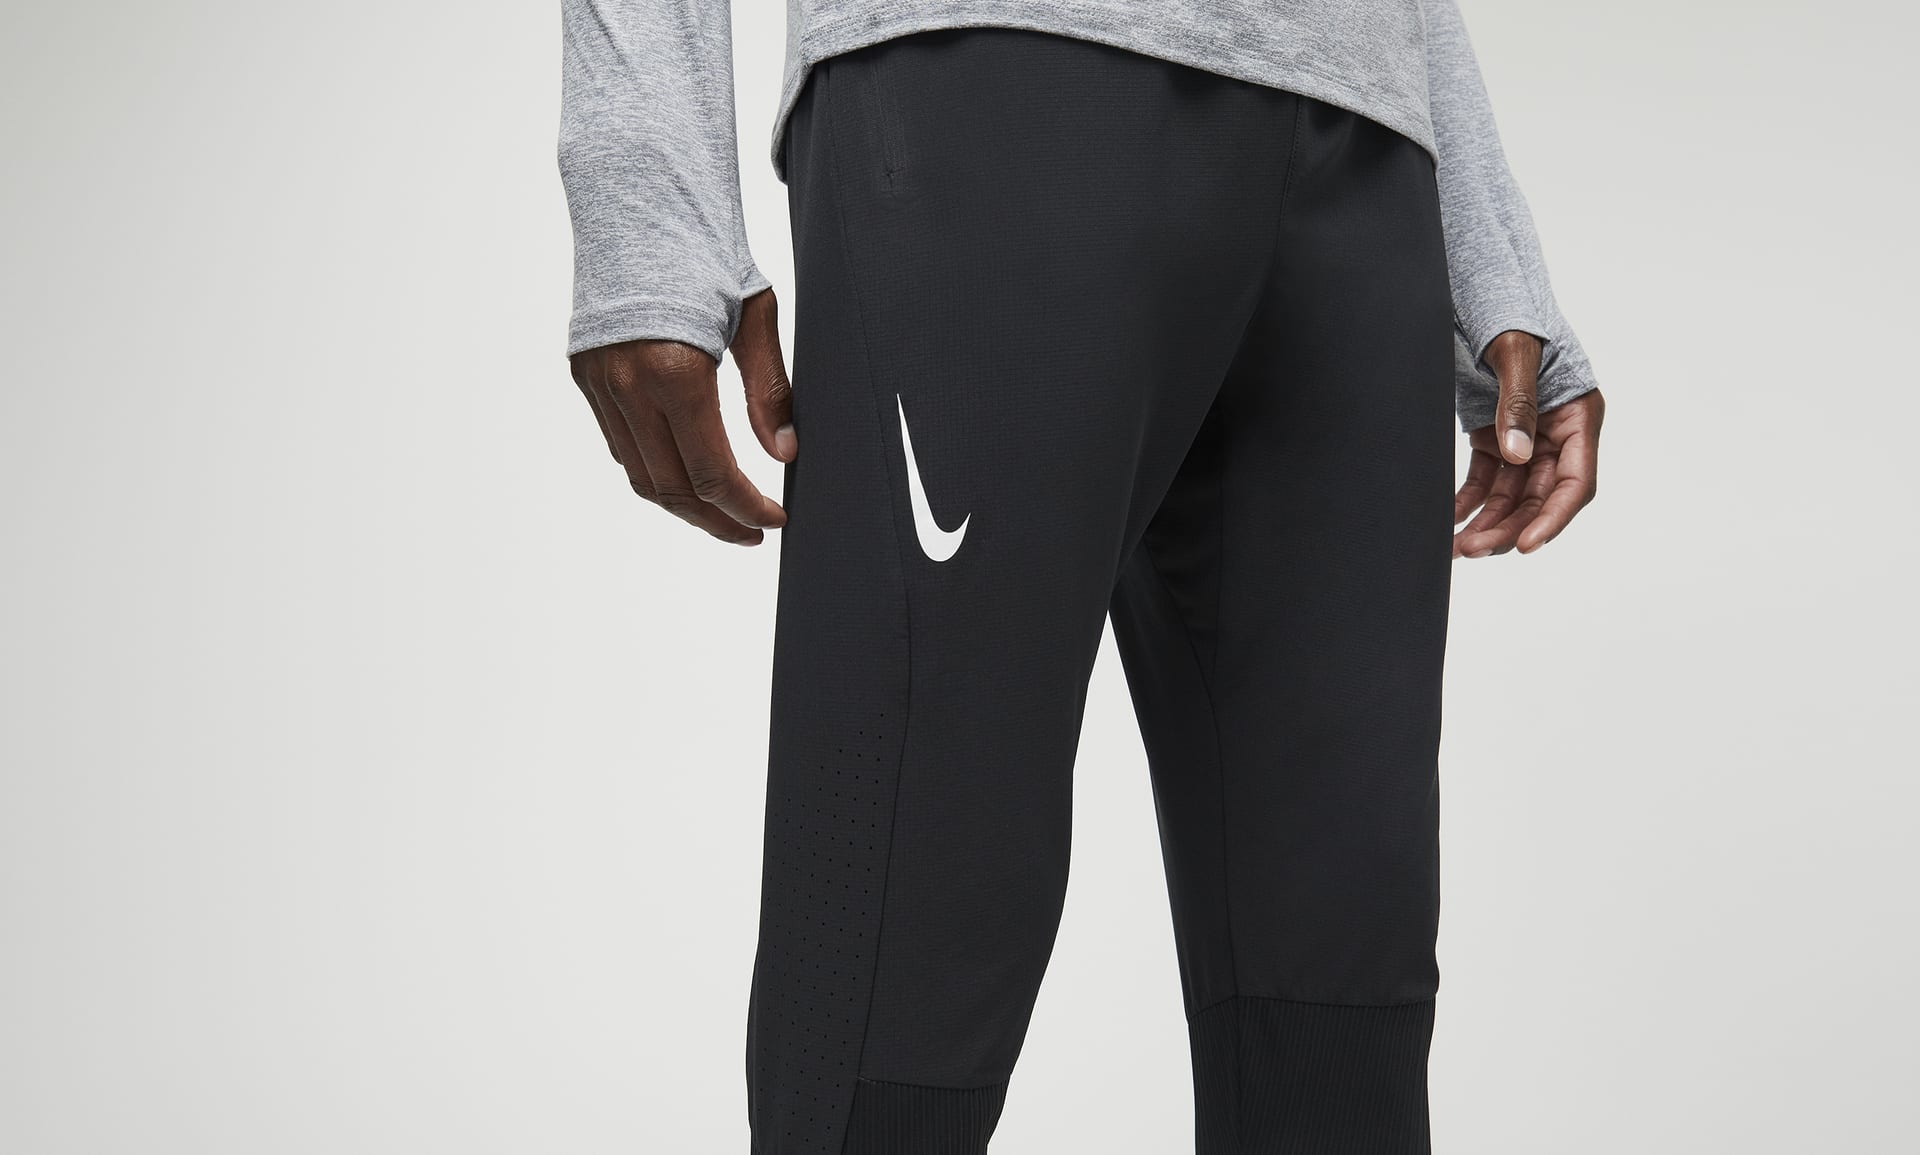  Nike Men's DRI-FIT ADV AEROSWIFT Racing Tights Leggings,  Black/Royal/Grey, Medium : Clothing, Shoes & Jewelry